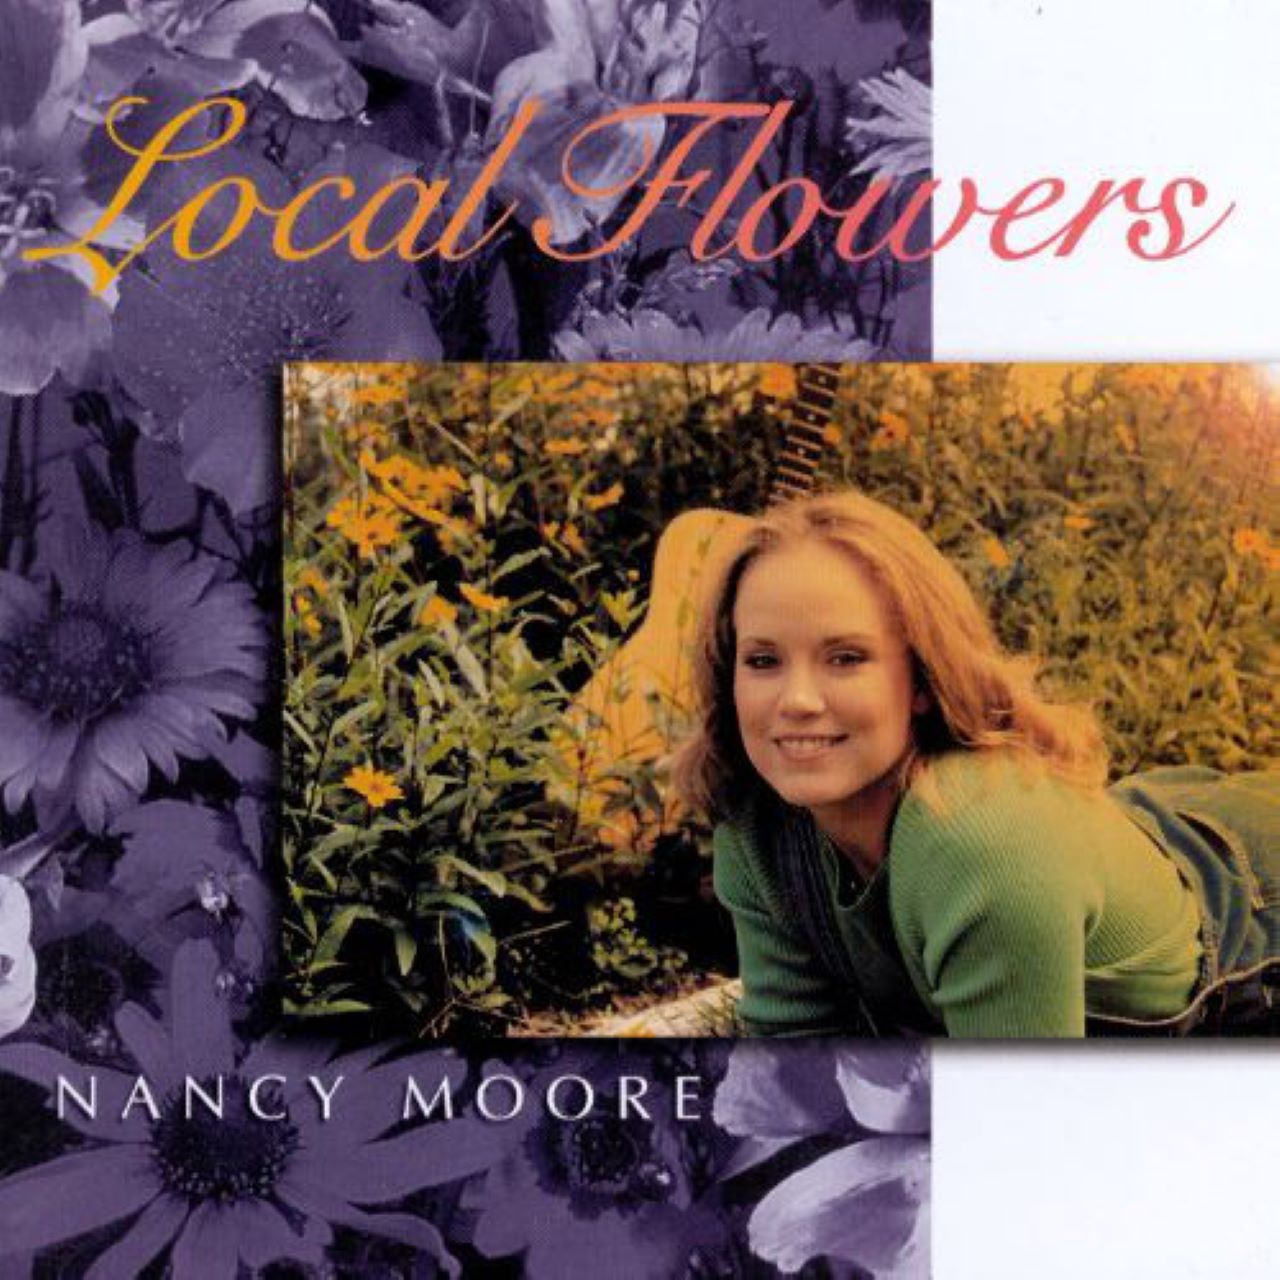 Nancy Moore - Local Flowers cover album